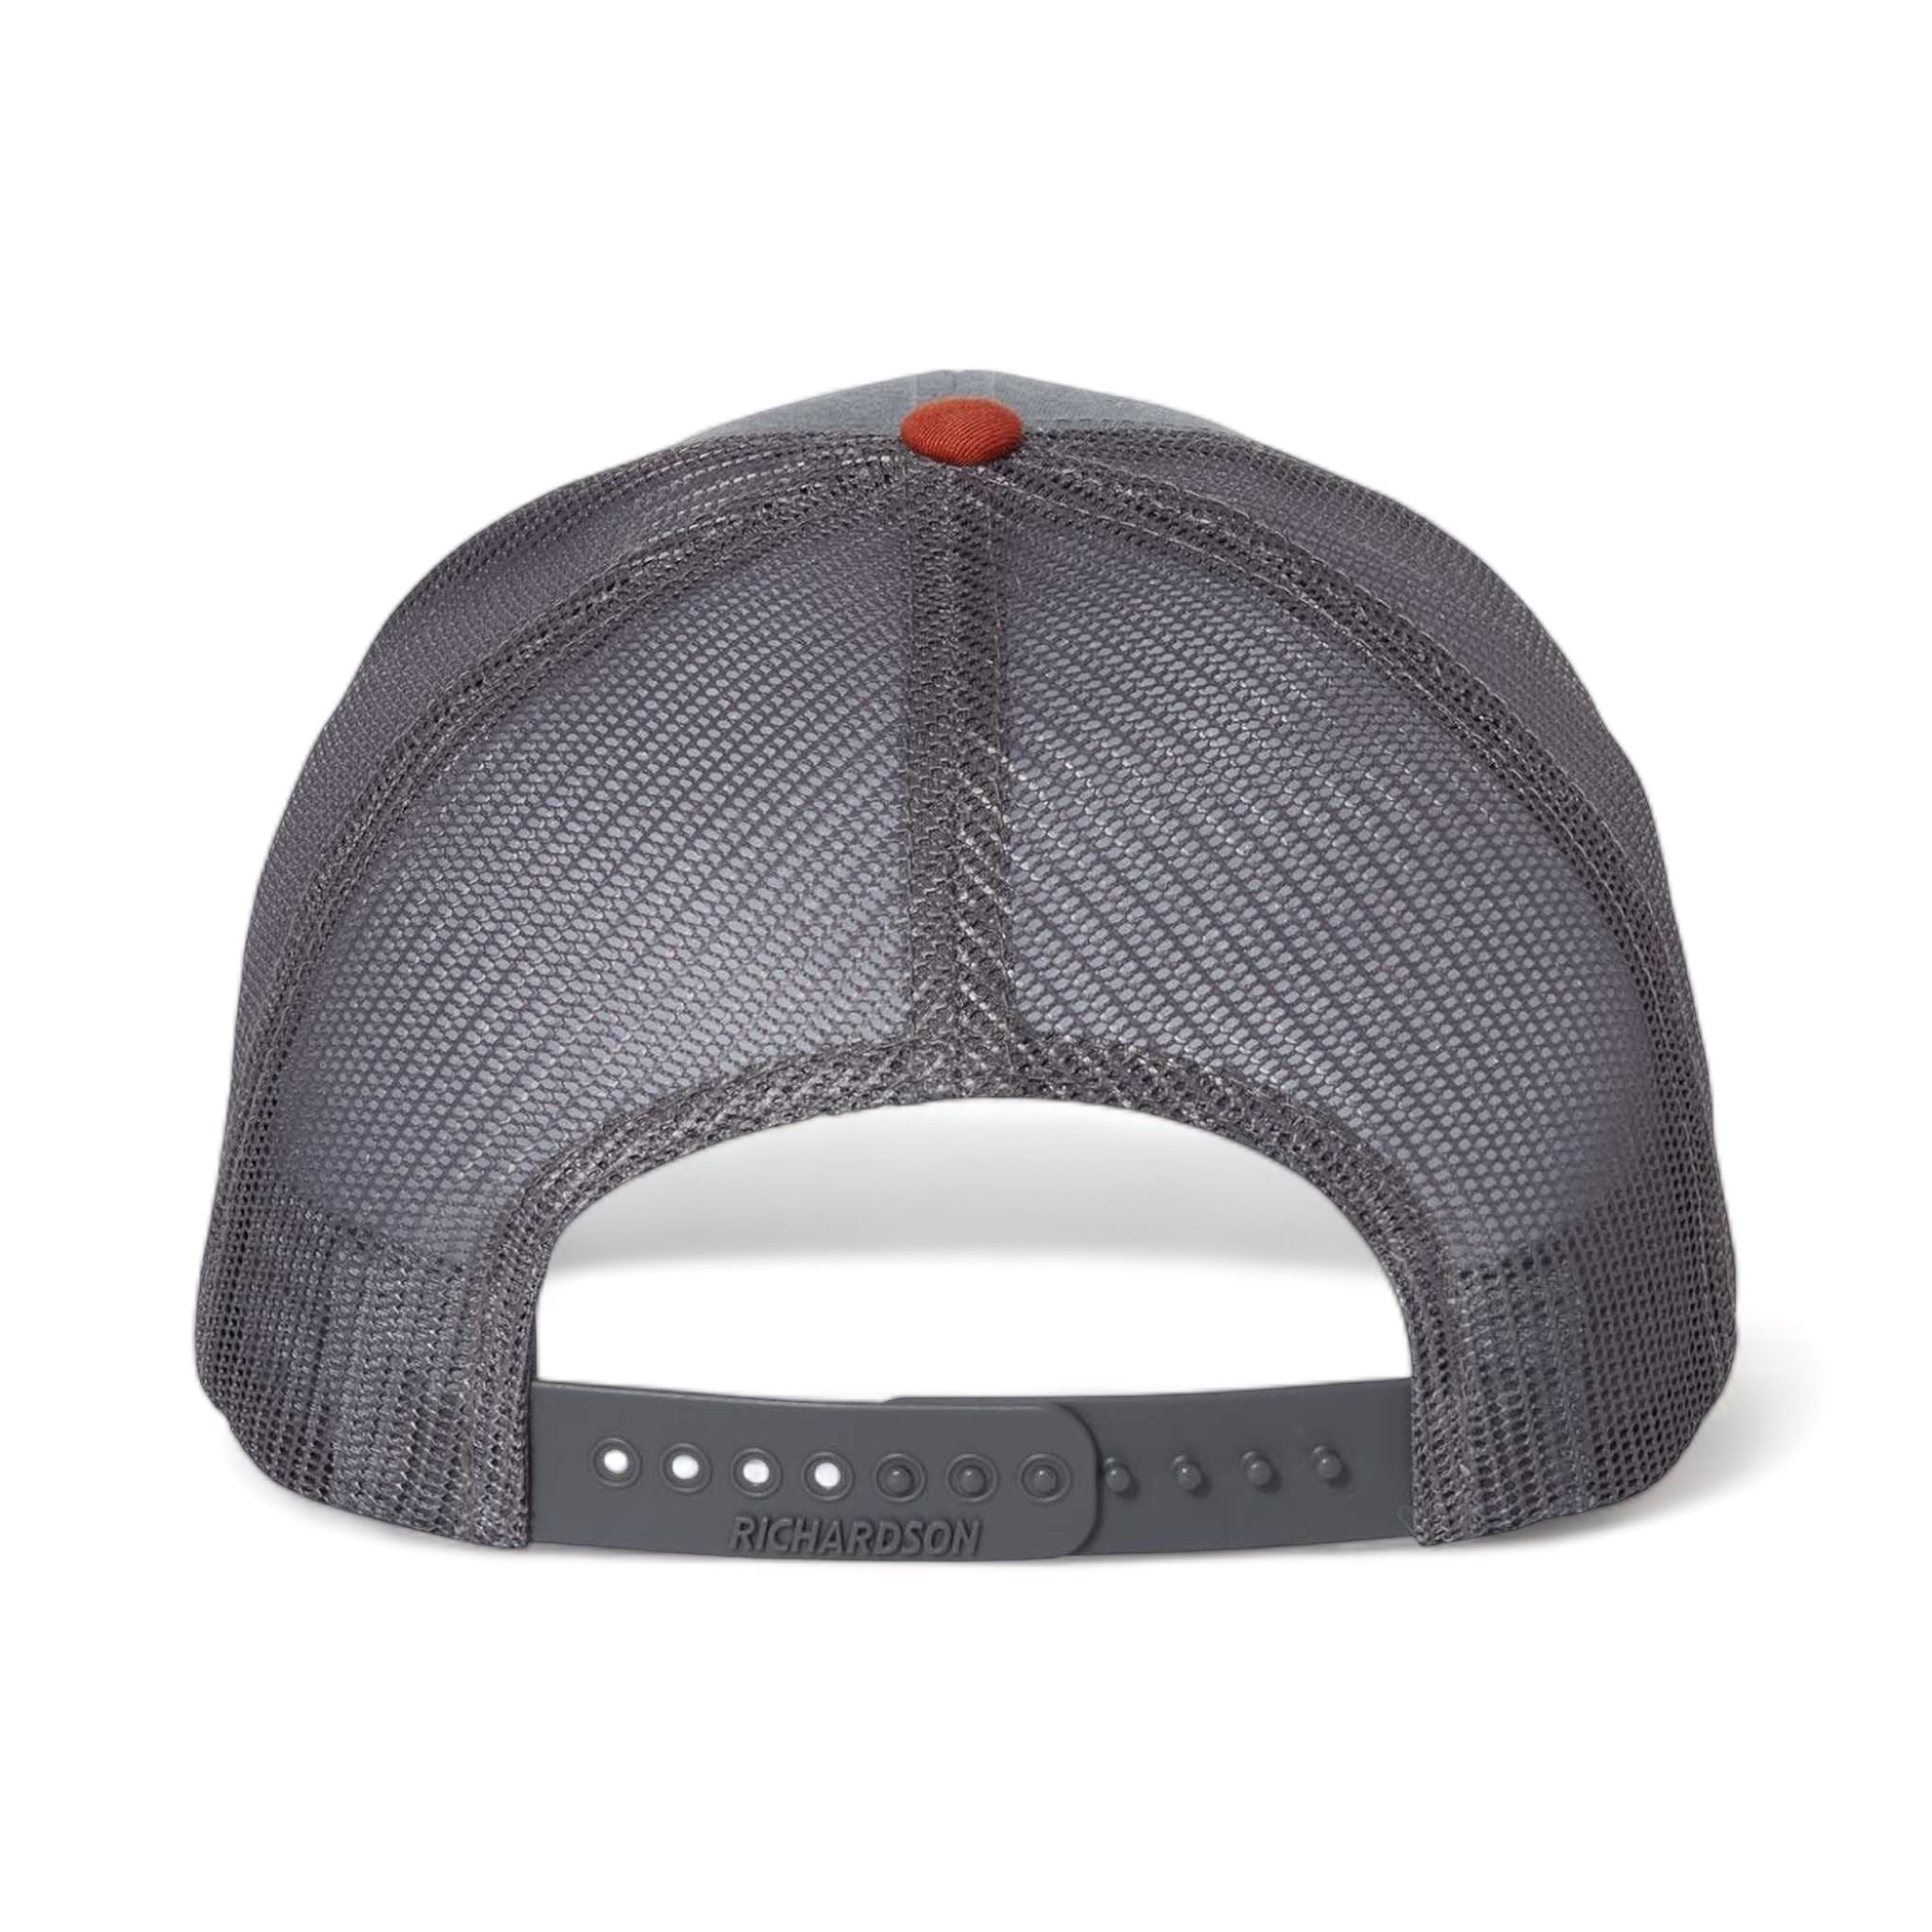 Back view of Richardson 112 custom hat in heather grey, charcoal and dark orange